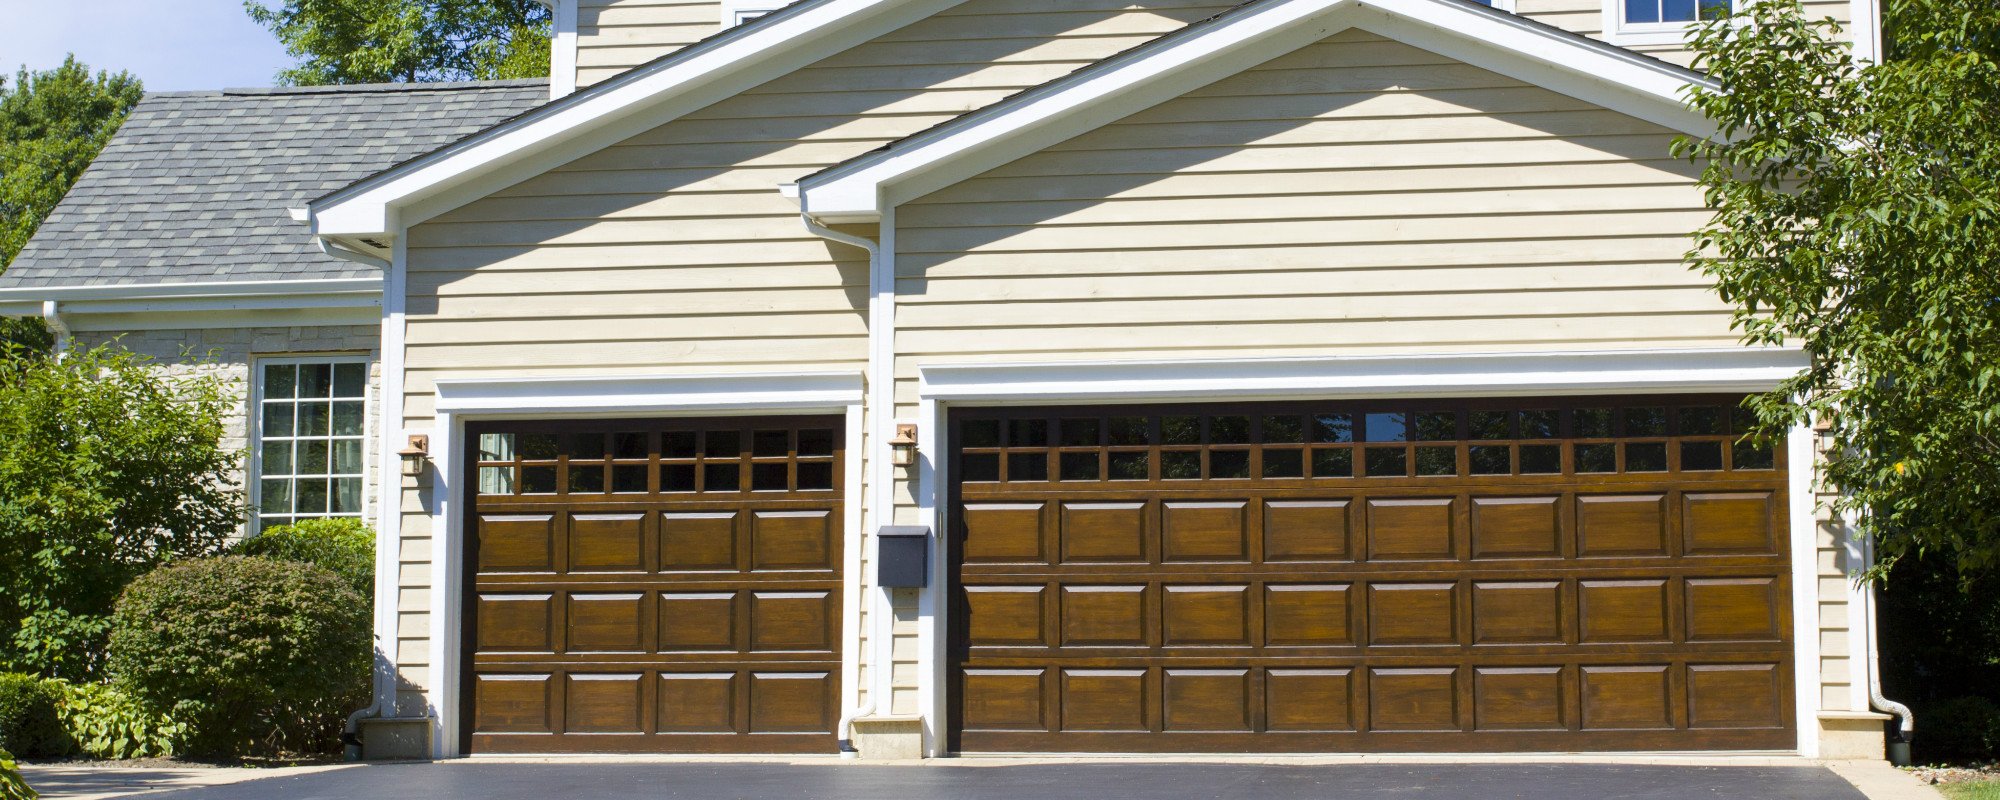 Browning Garage Doors